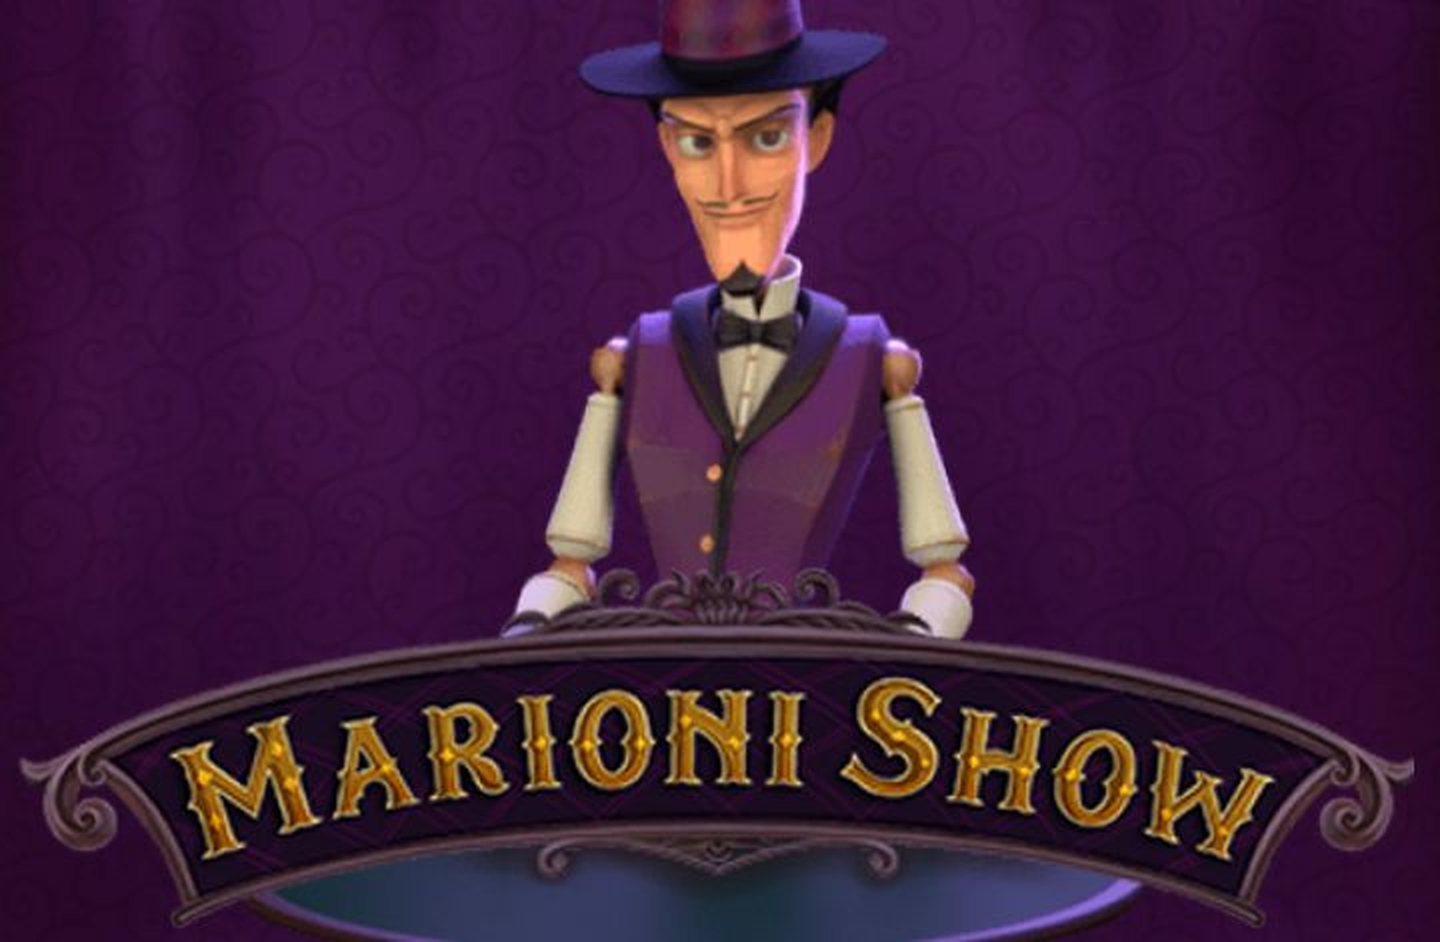 Marioni Show demo